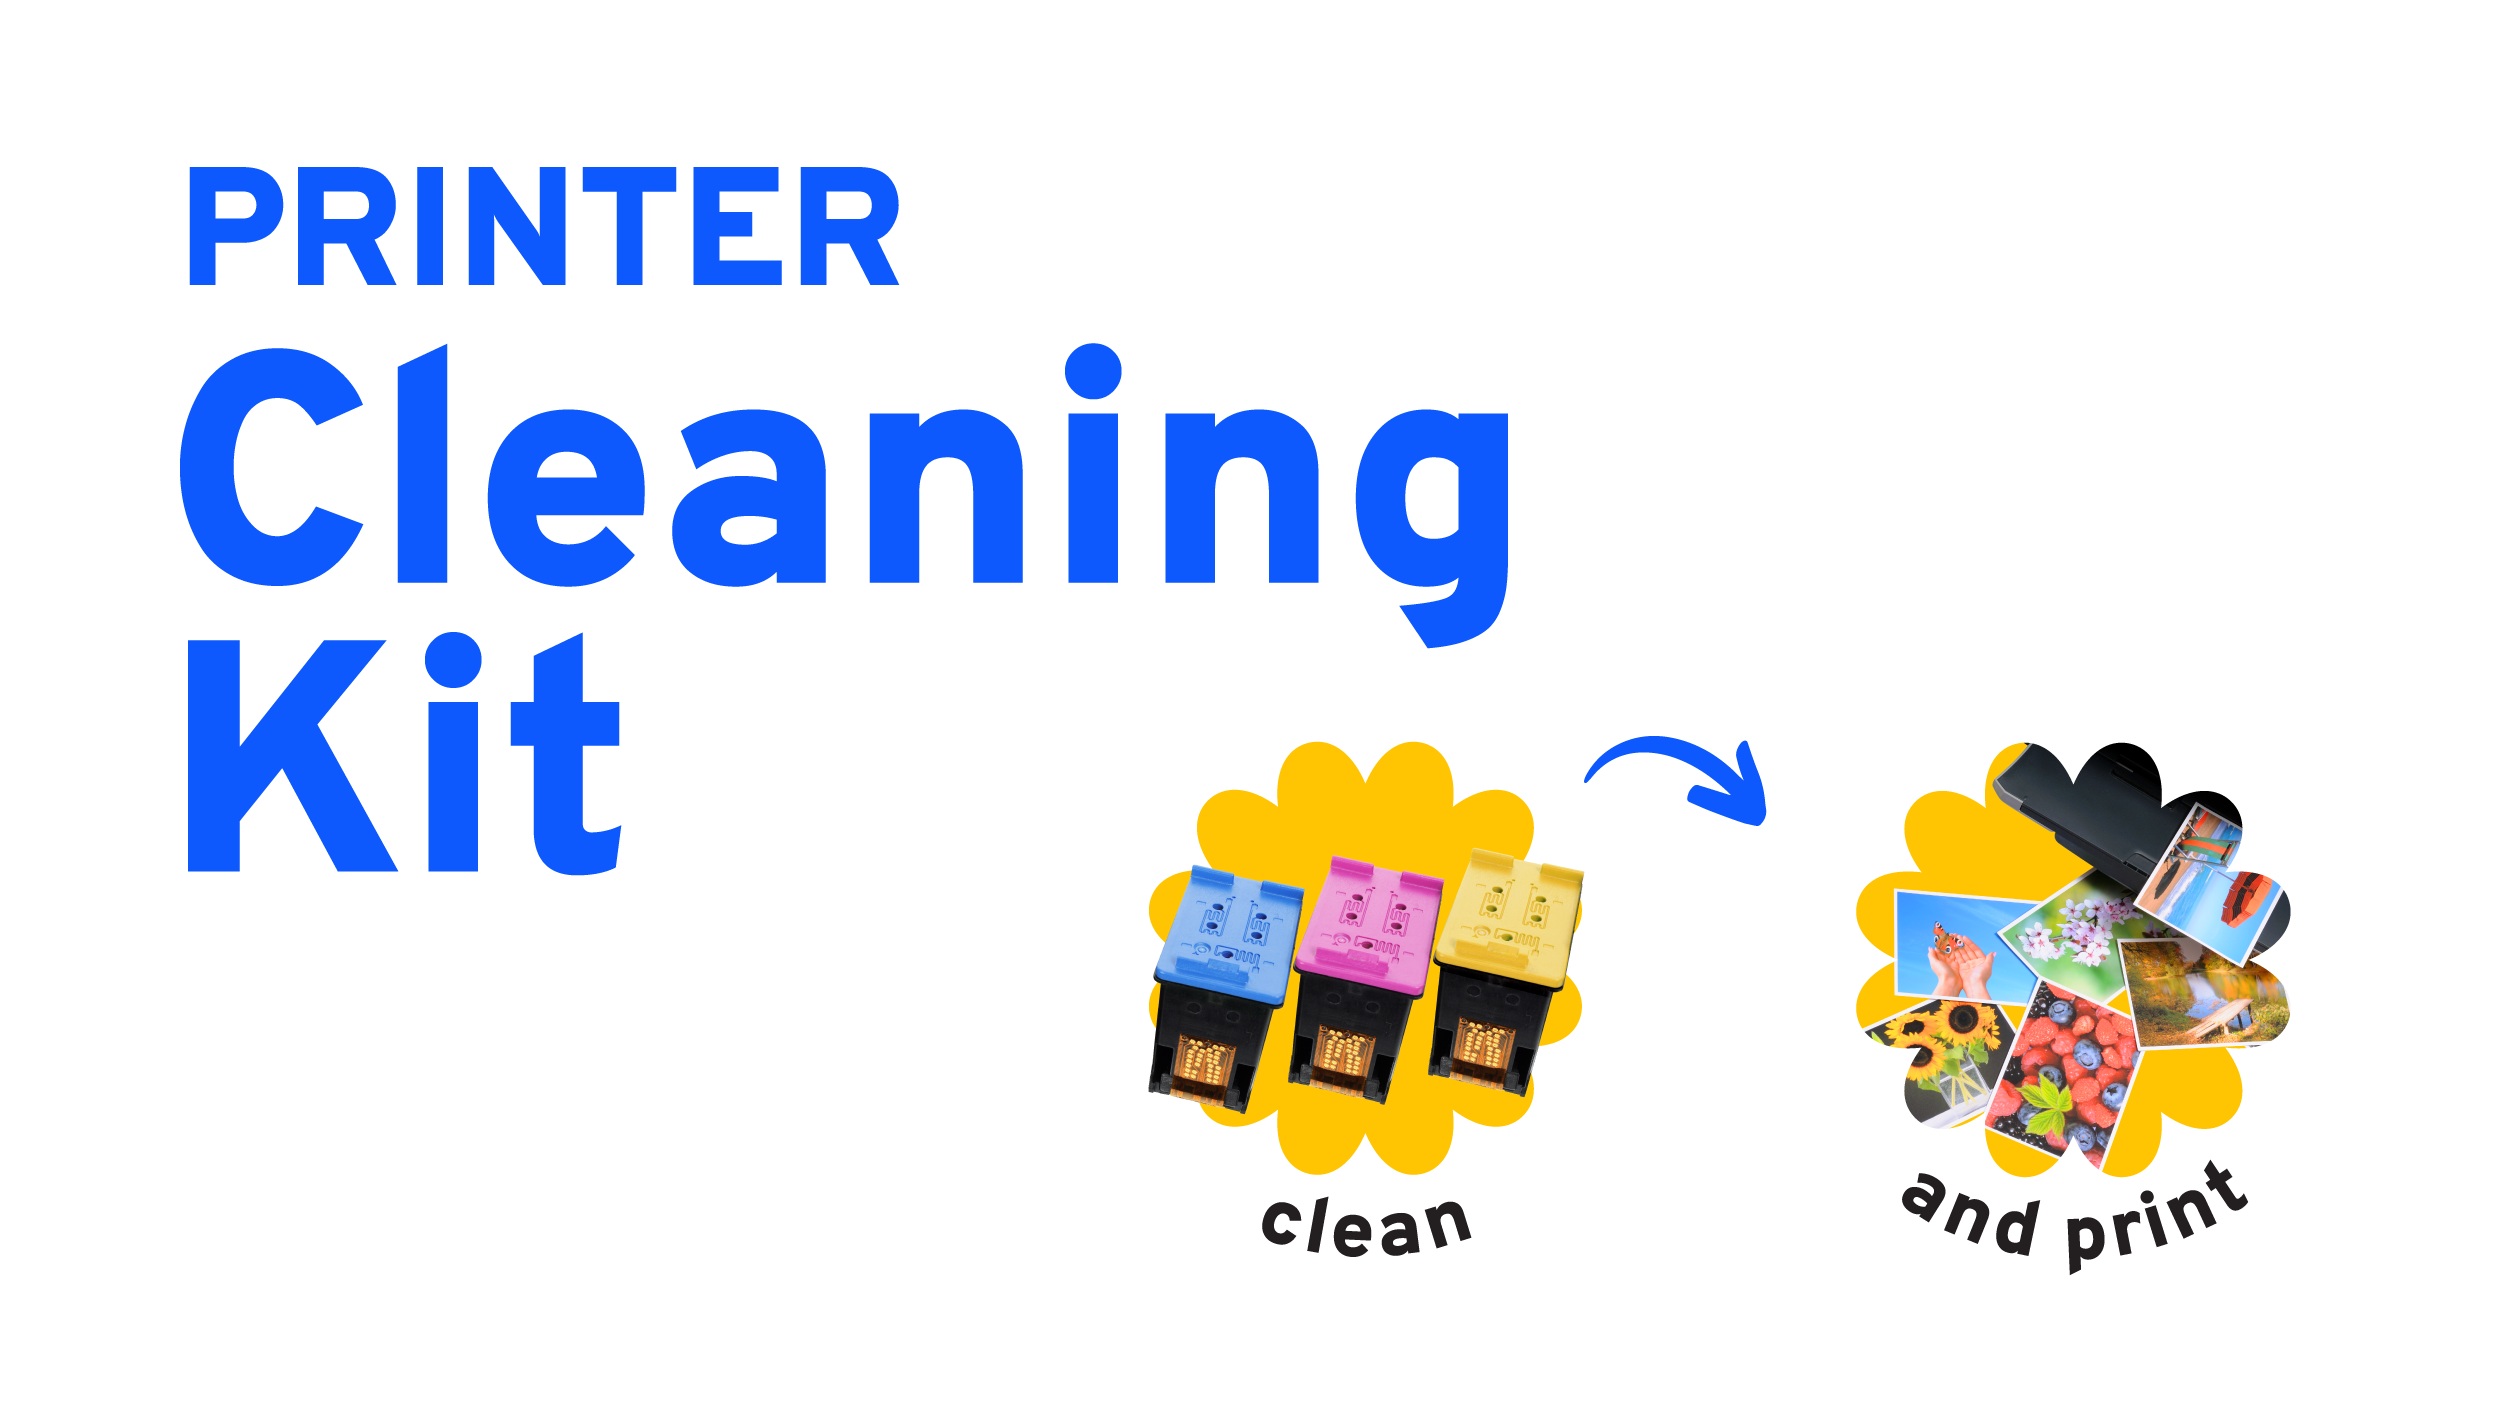 printer cleaning kit mobile banner